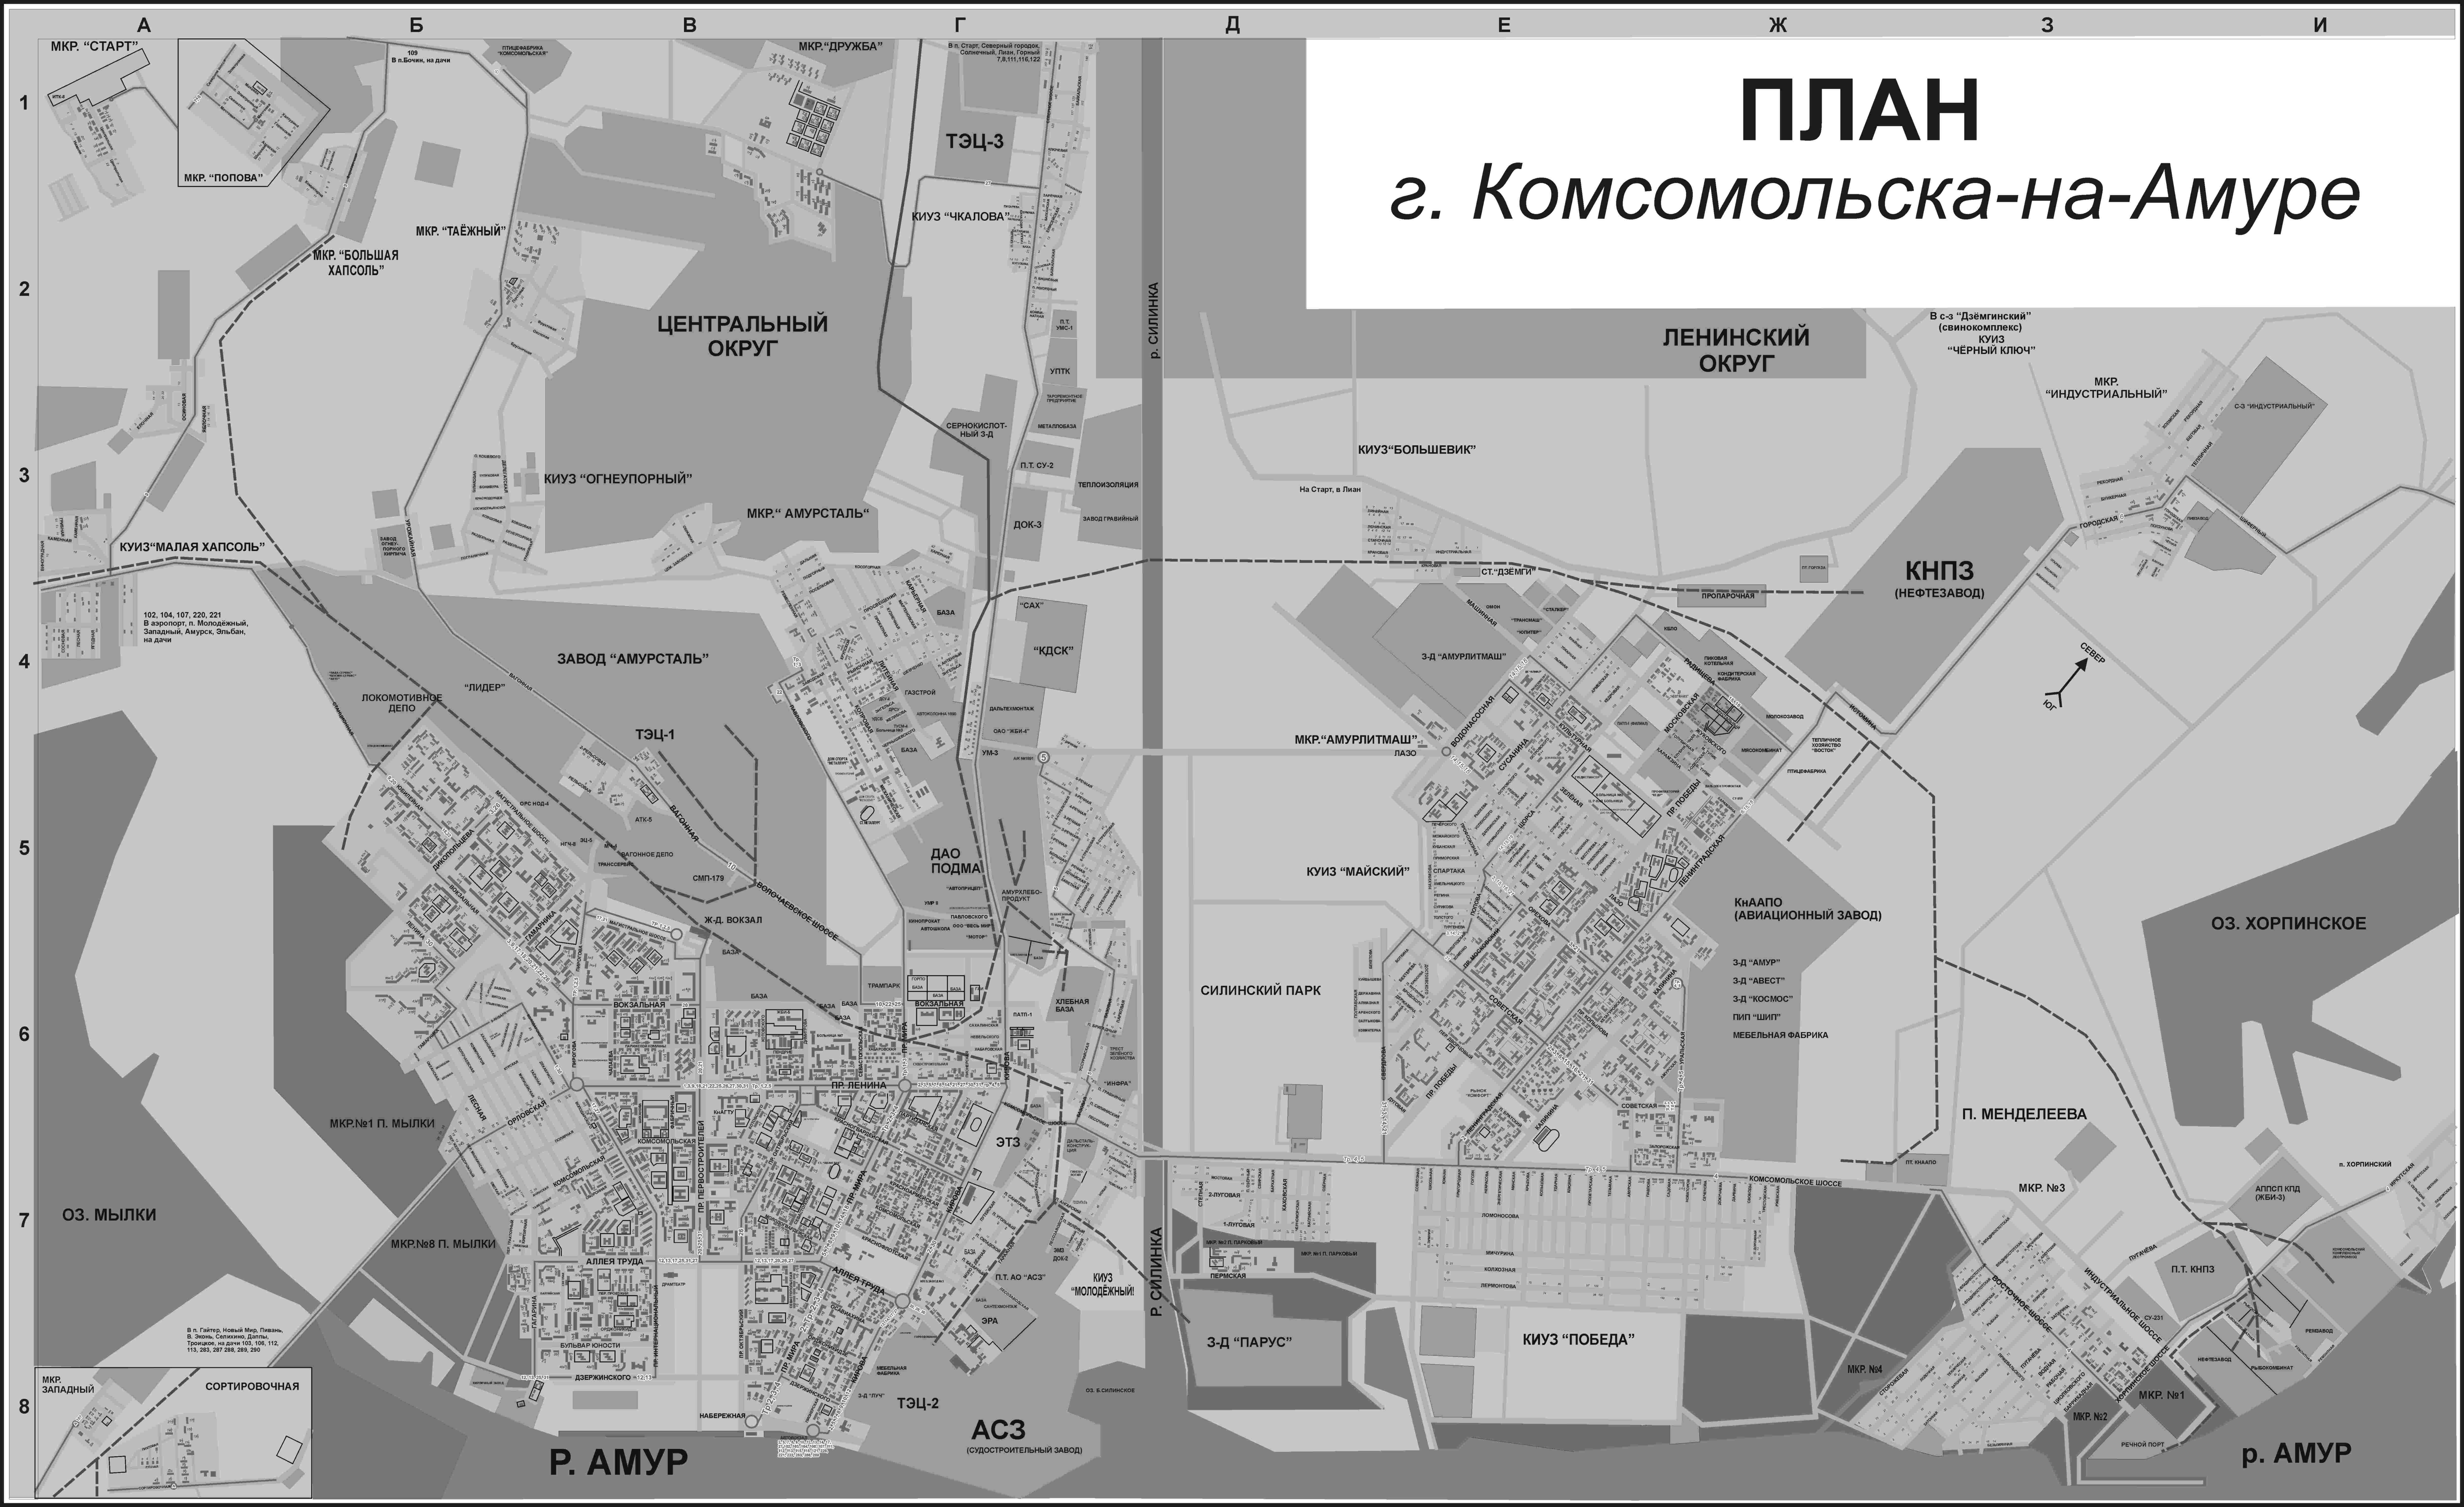 Карта комсомольск амуре